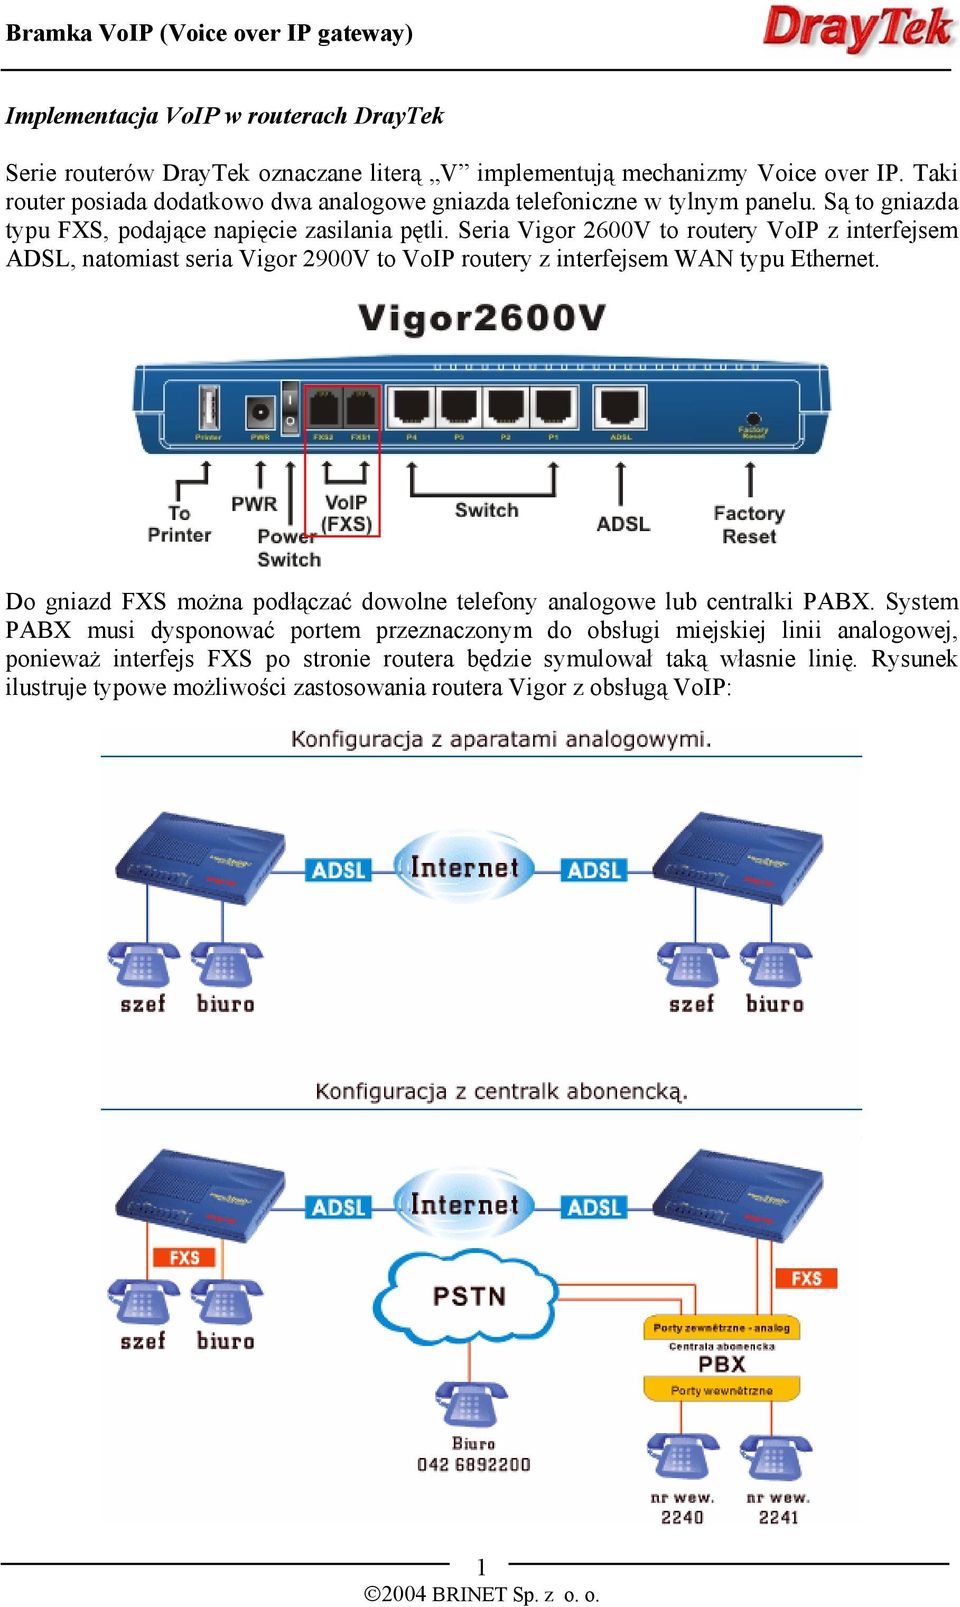 Seria Vigor 2600V to routery VoIP z interfejsem ADSL, natomiast seria Vigor 2900V to VoIP routery z interfejsem WAN typu Ethernet.